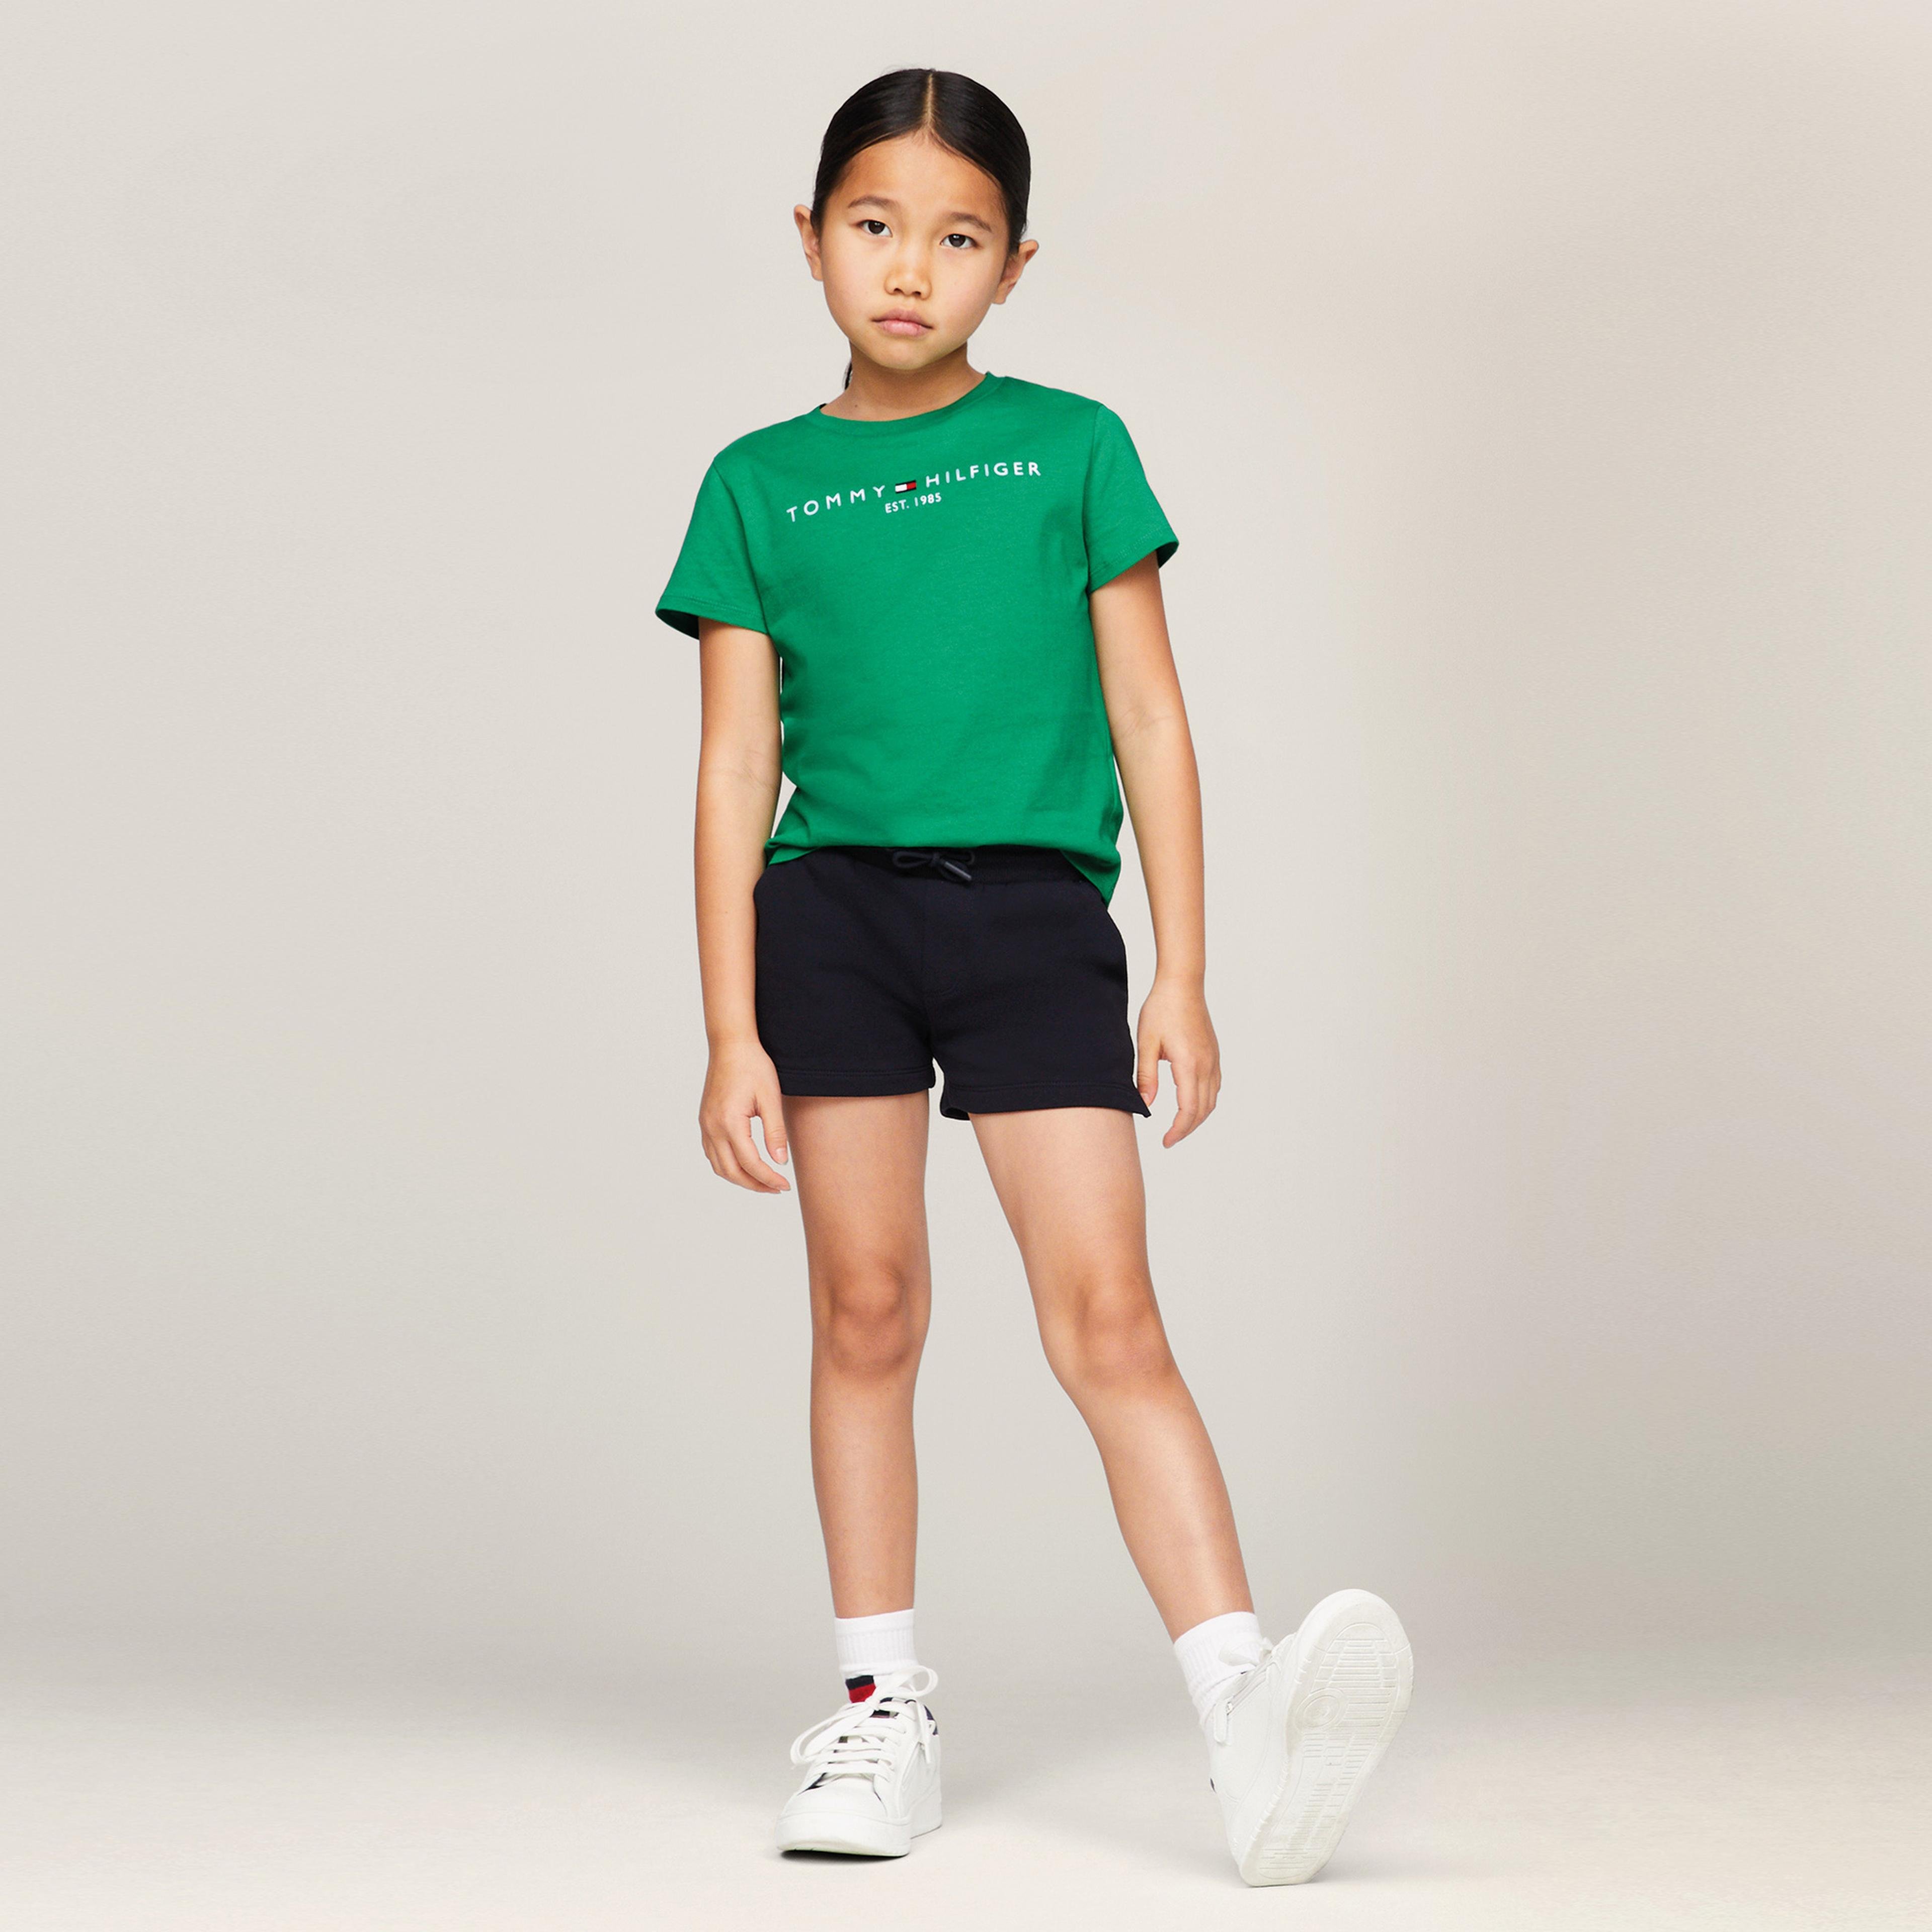 Tommy Hilfiger Essential Kız Çocuk Yeşil T-Shirt